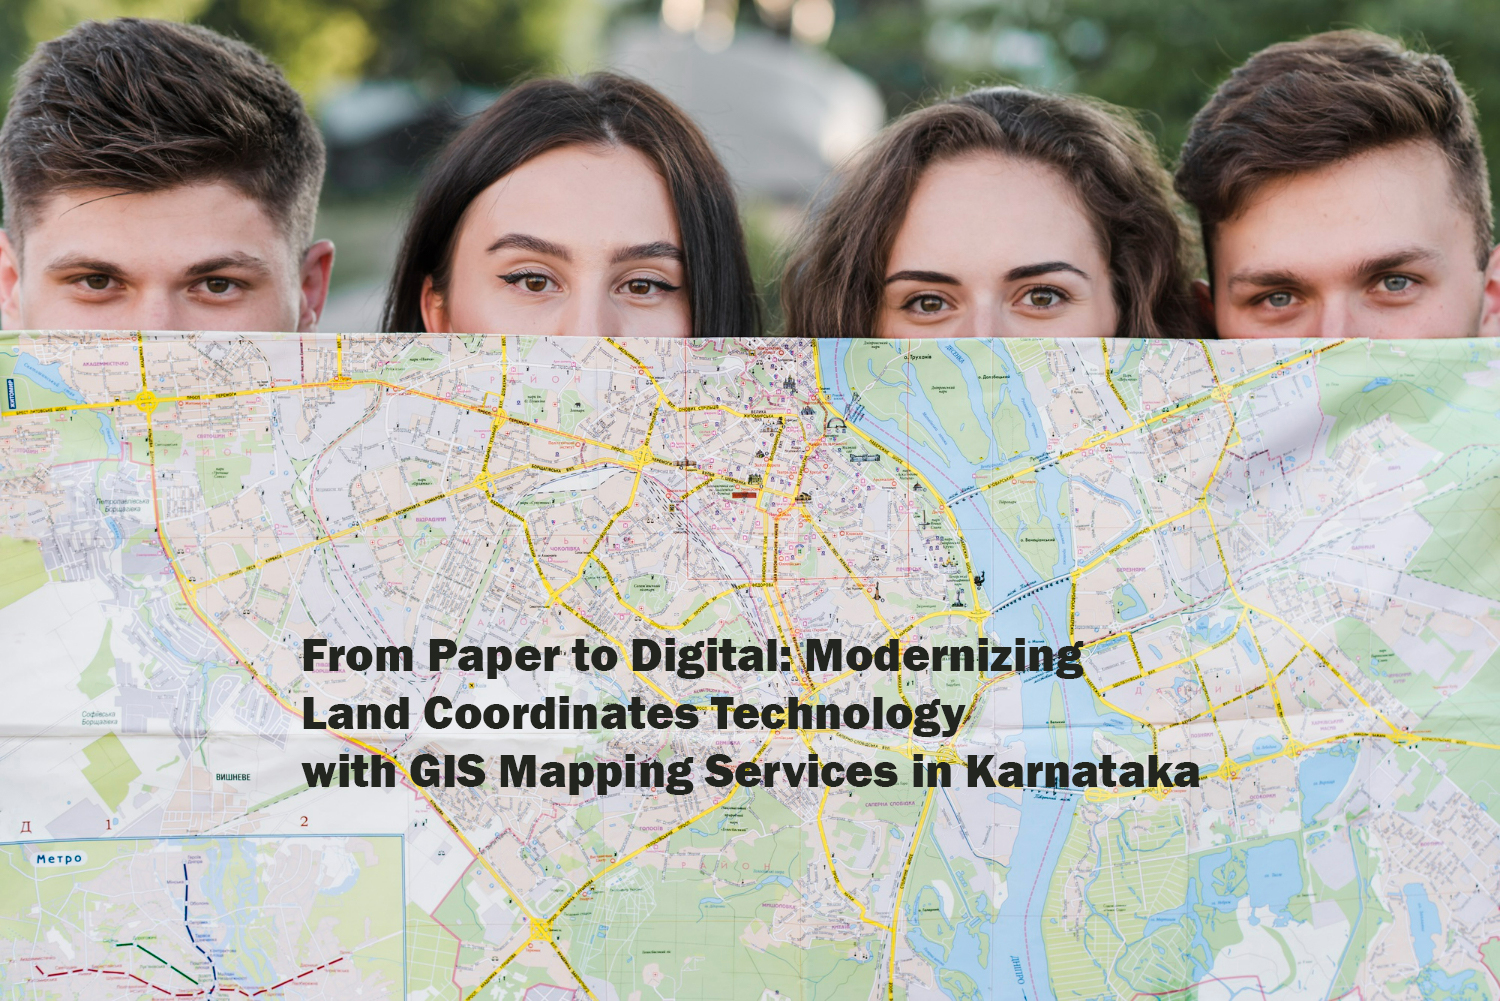 Modernizing Land Coordinates Technology with GIS Mapping Services in Karnataka